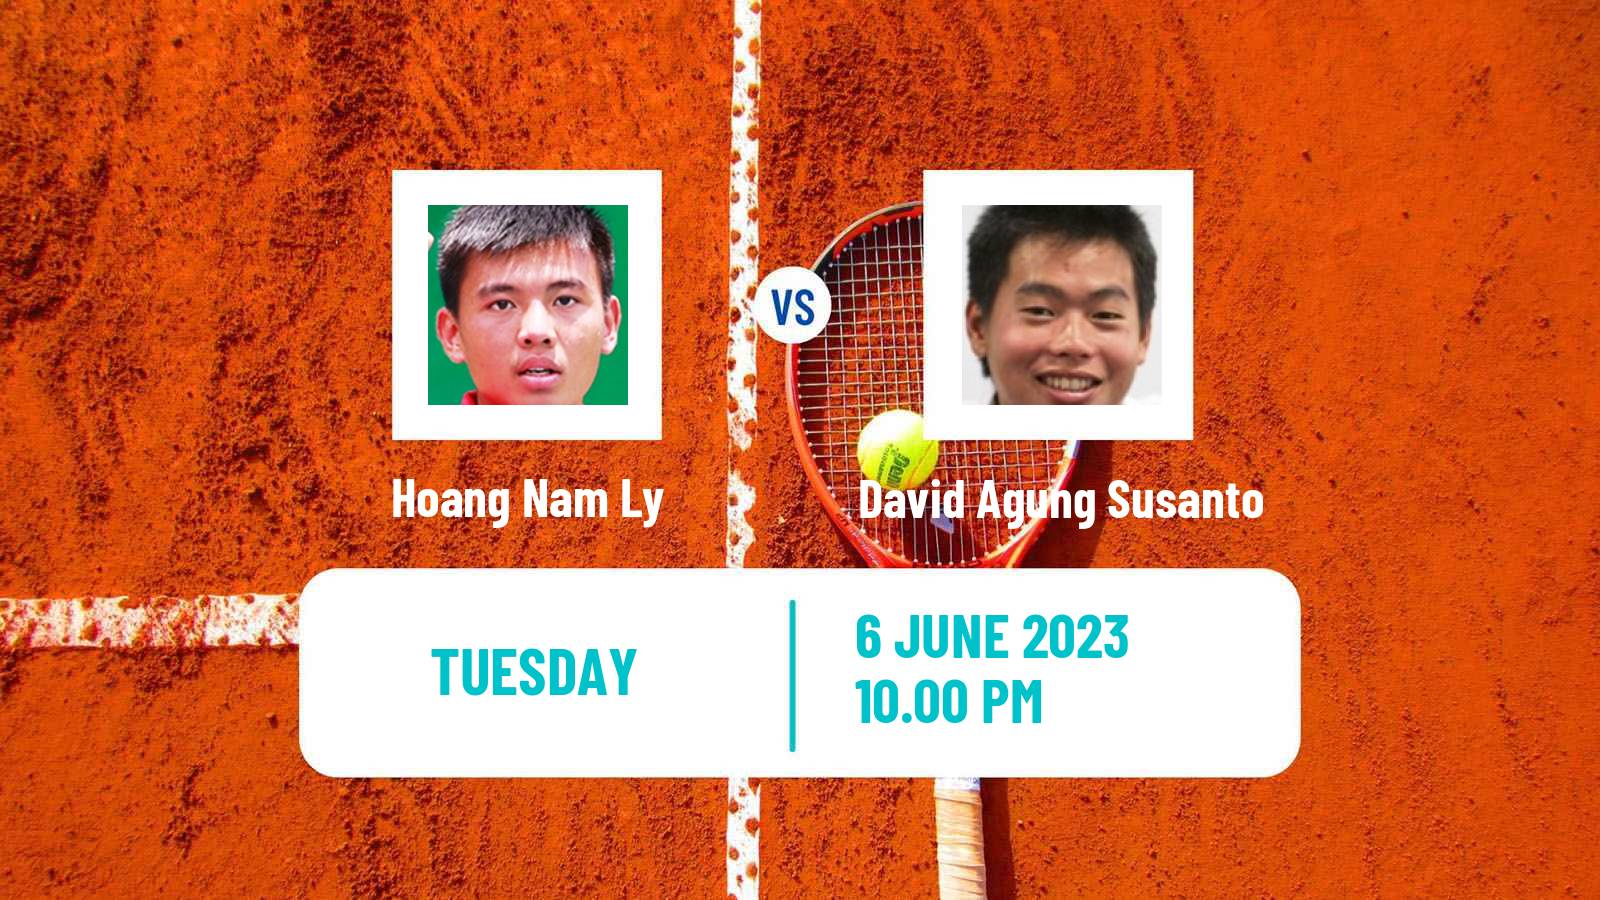 Tennis ITF M25 Jakarta 5 Men Hoang Nam Ly - David Agung Susanto